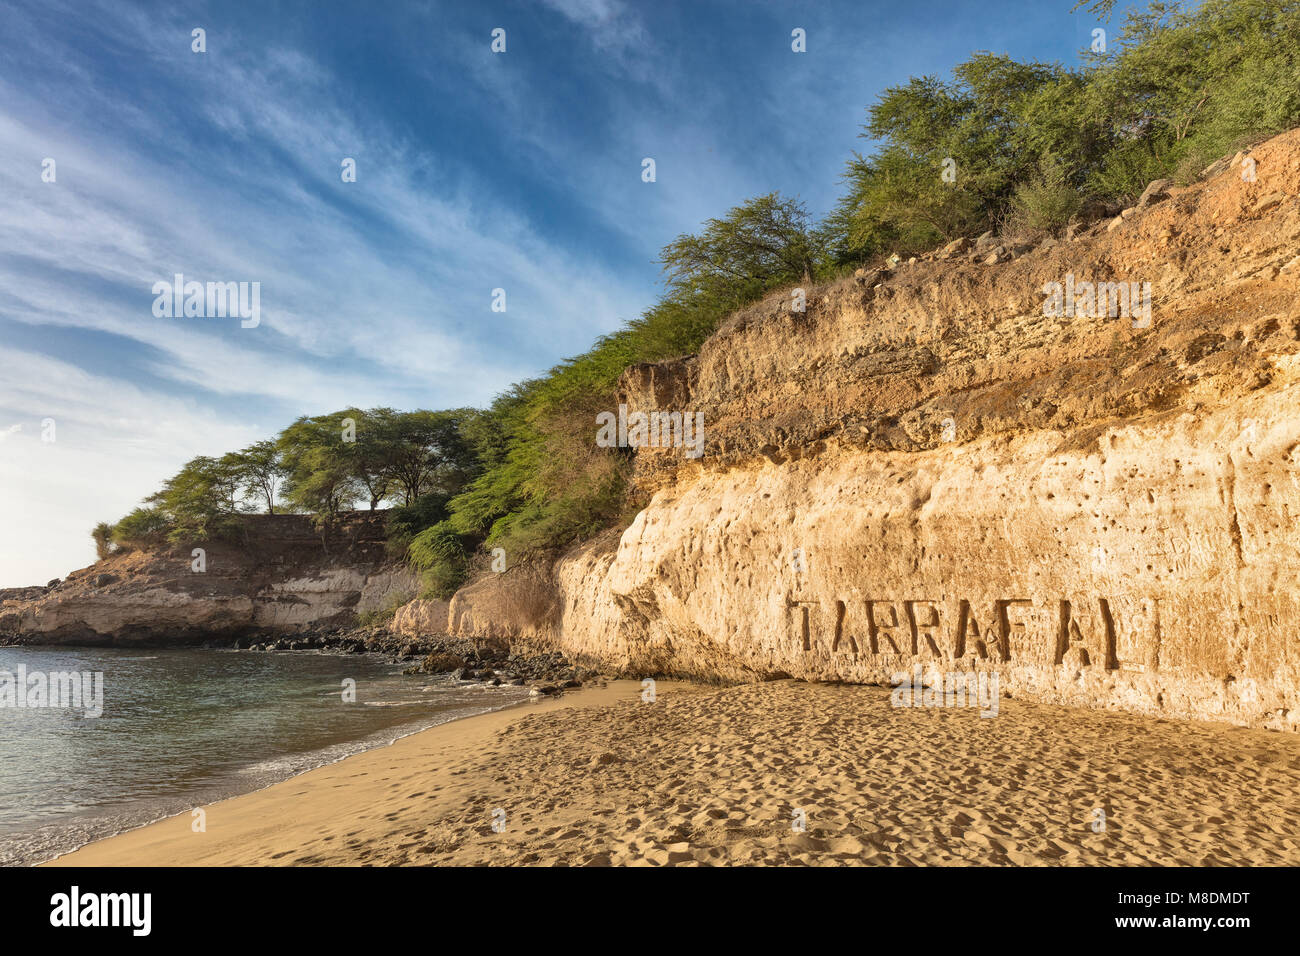 Name in die Felsen am Strand geschnitzt, Tarrafal, Kap Verde, Afrika Stockfoto